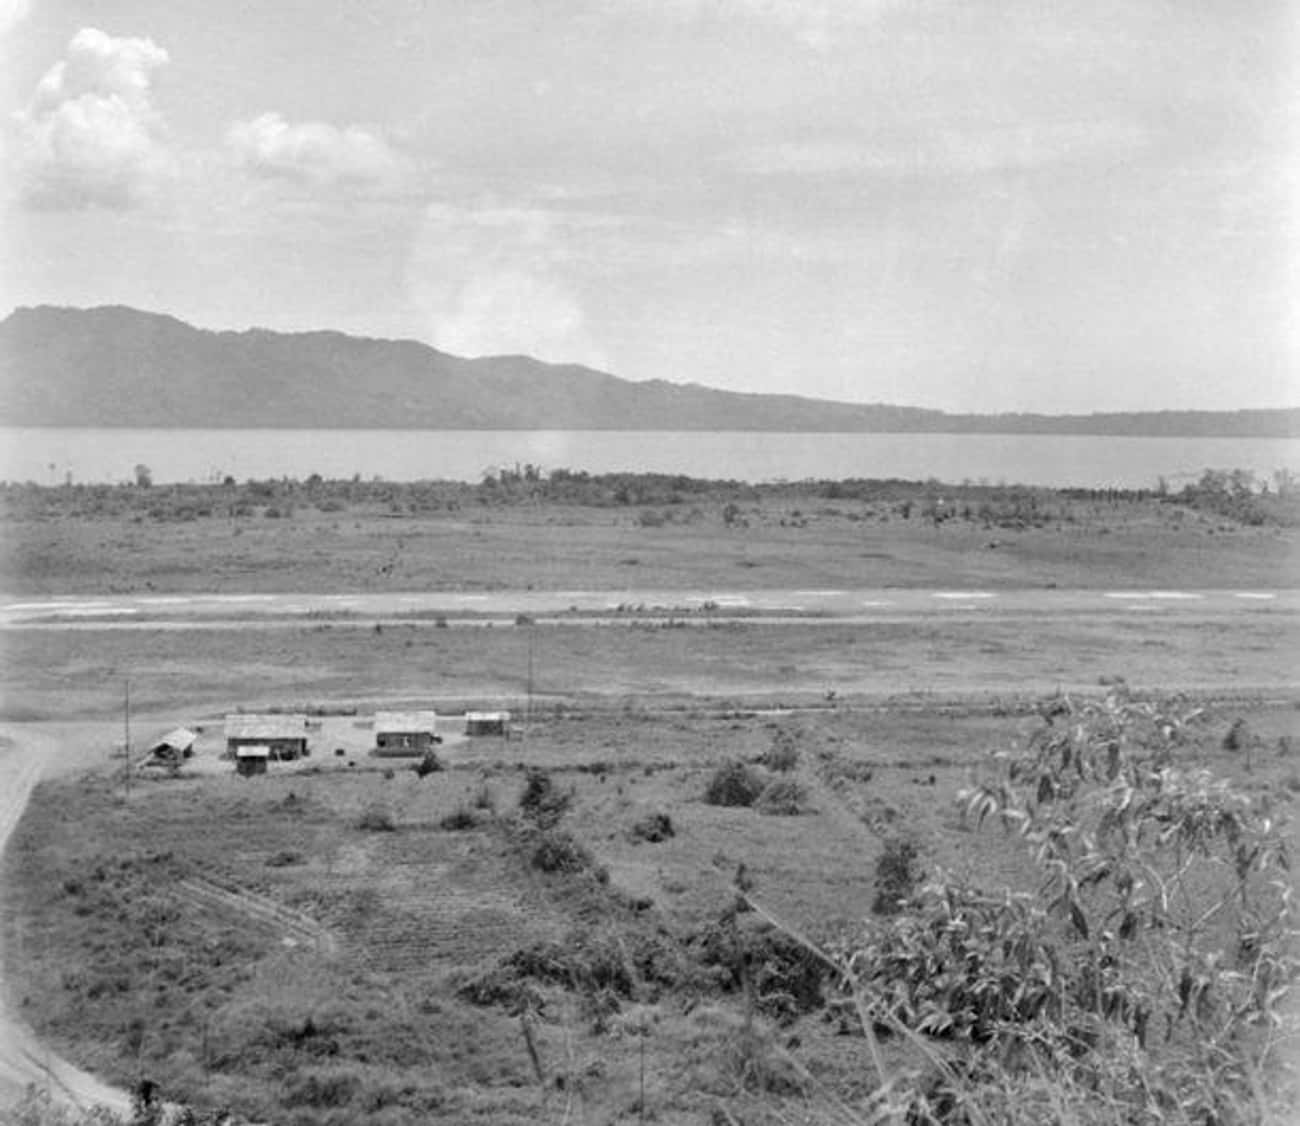 The Laha Airfield Massacre